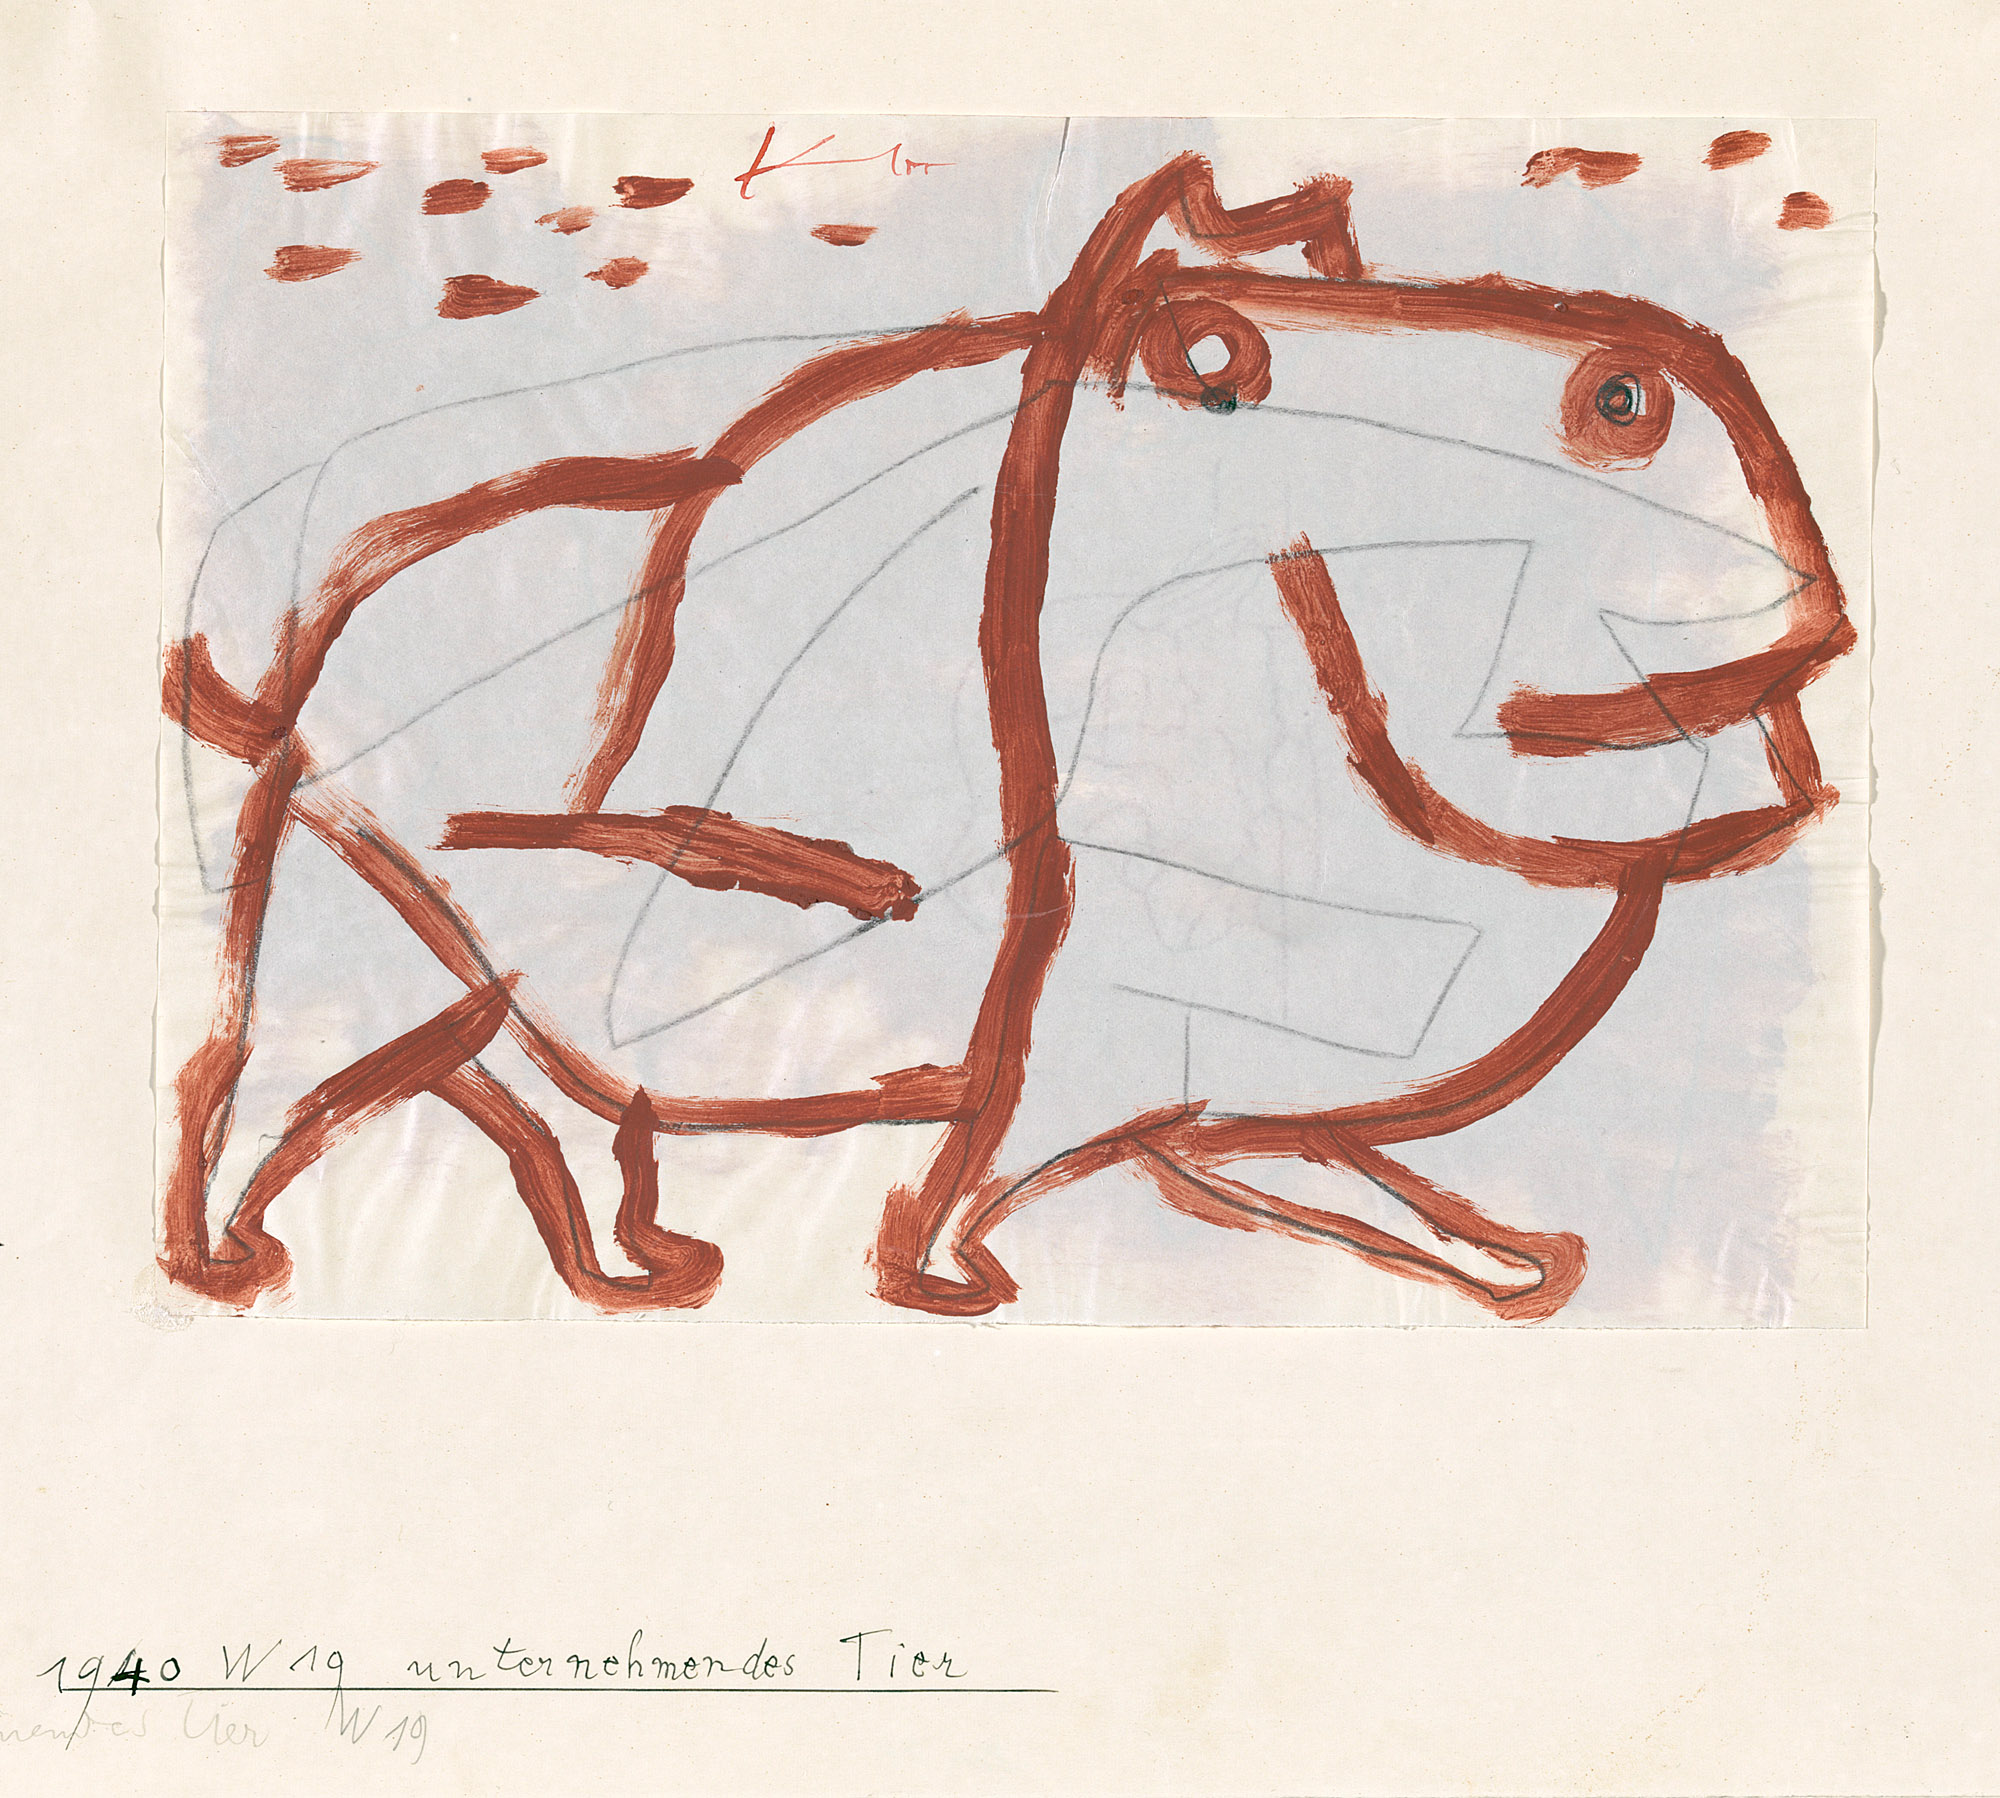 Animale intraprendente by Paul Klee - 1940 Zentrum Paul Klee